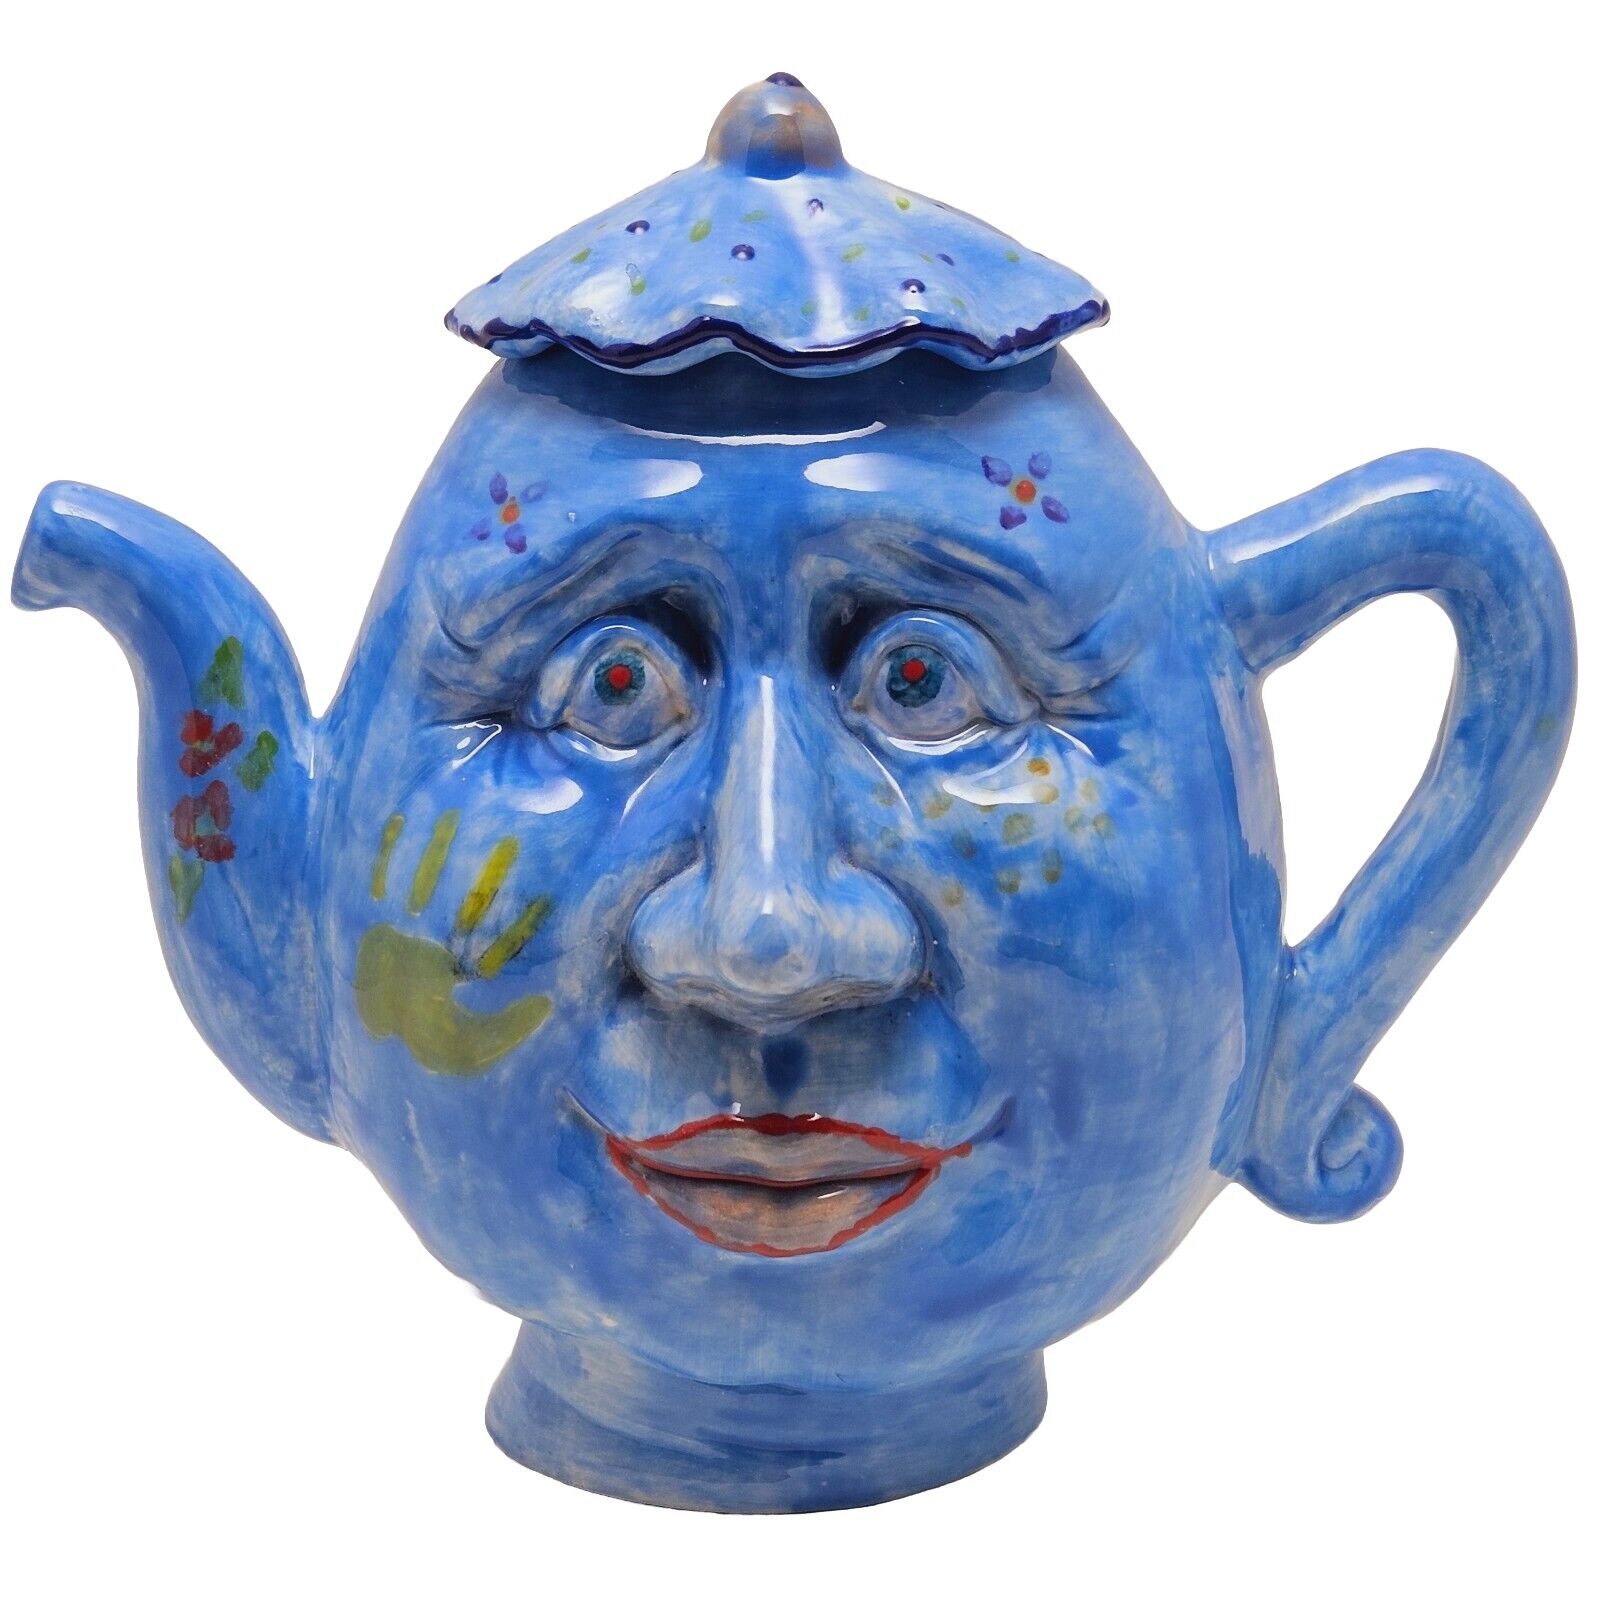  Whimsical Folk Art Face Tea Pot Artisan Handmade Pottery 48oz Happy Smile